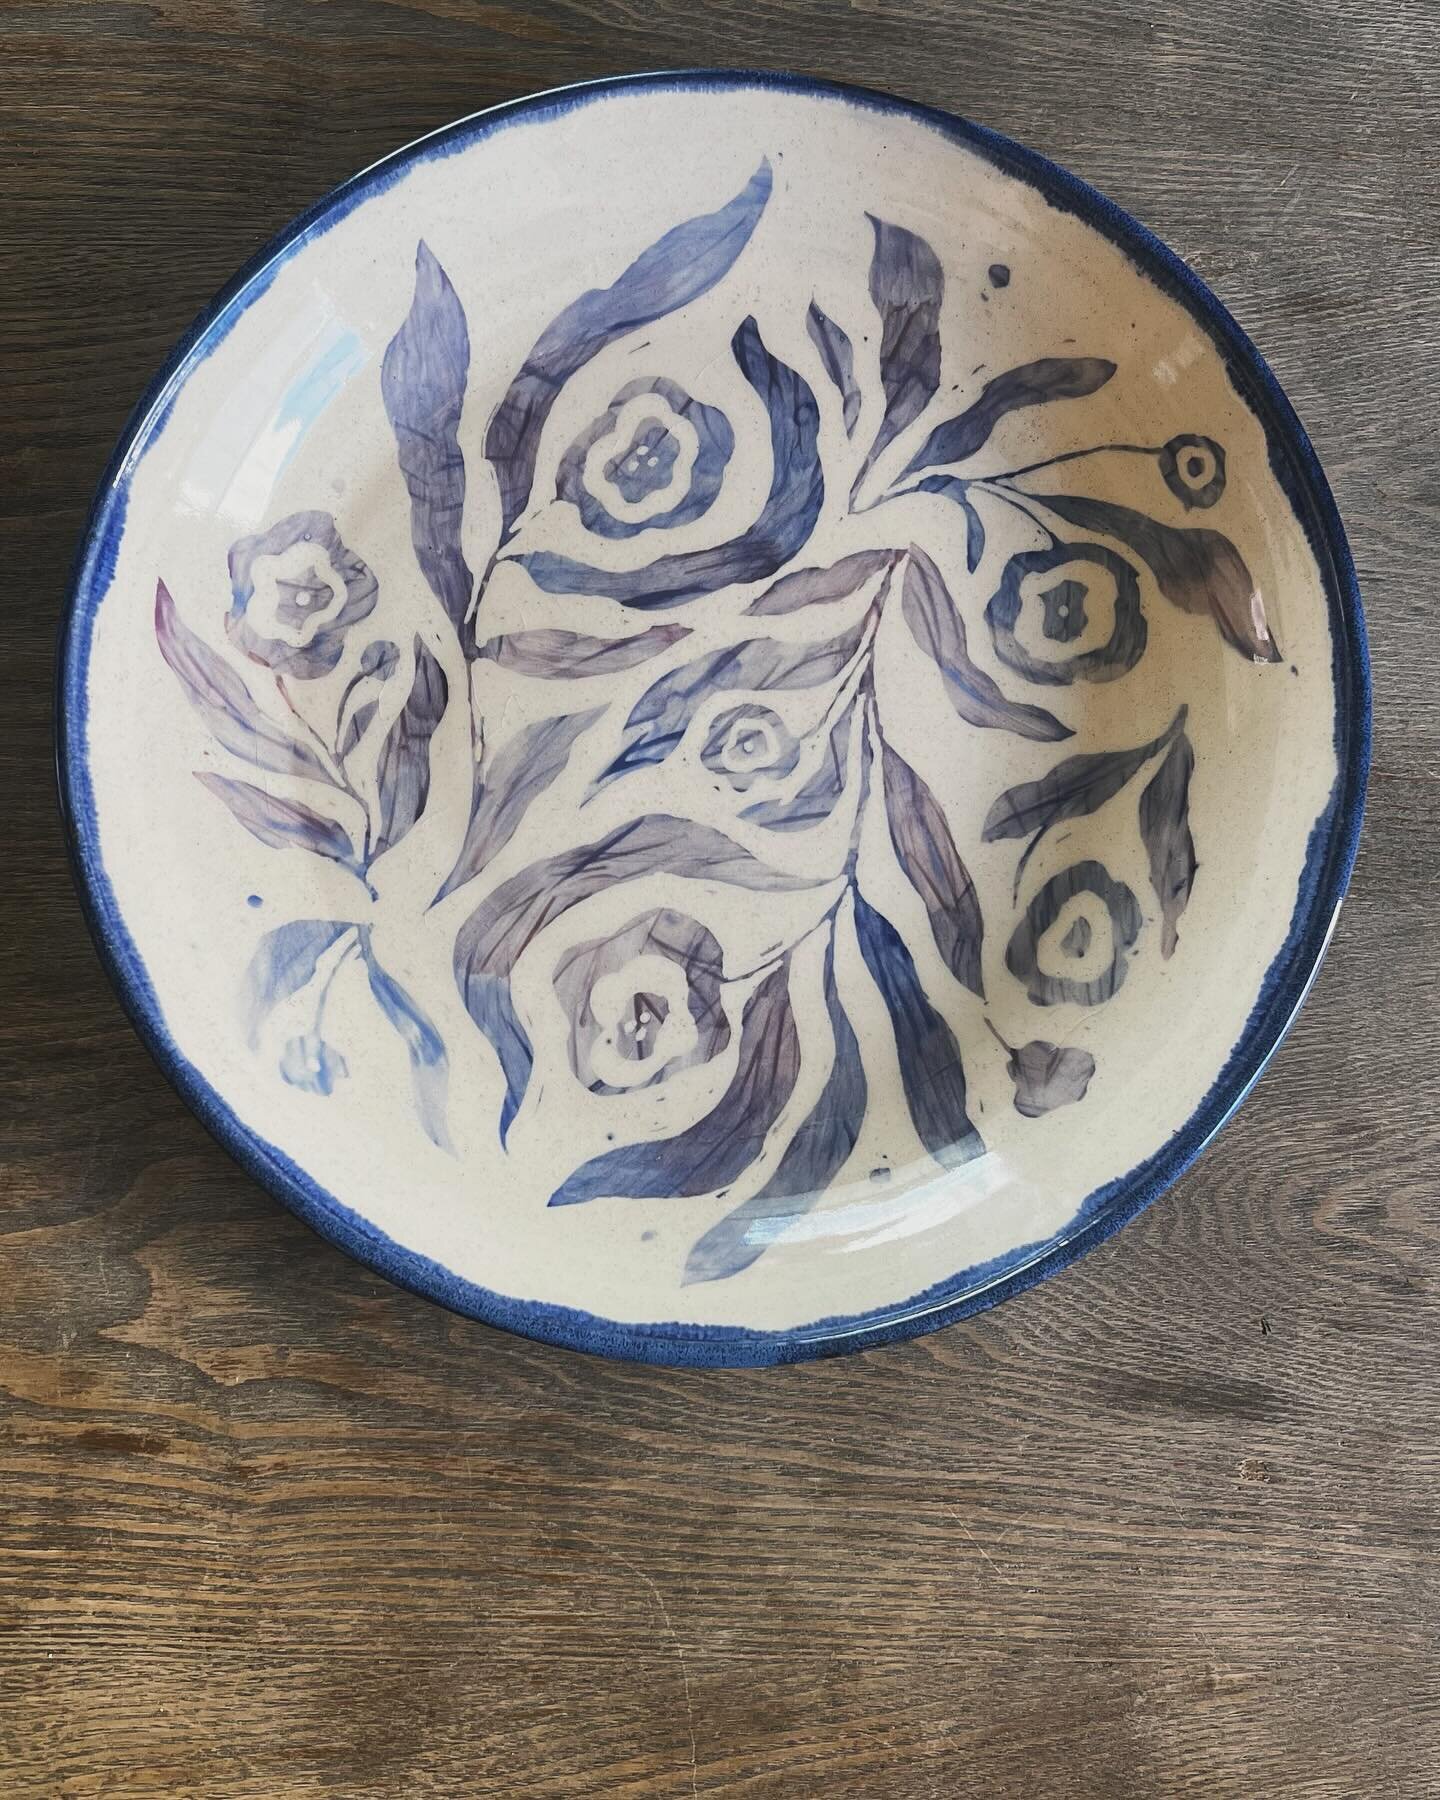 .

#claysculpture #richmondvirginia #ceramics #ceramicstudio #handmadeceramics #ceramicsart #handbuiltceramics #functionalceramics #womeninceramics #ceramicshop #ceramicsartist #cuteceramics #pottery #potterystudio